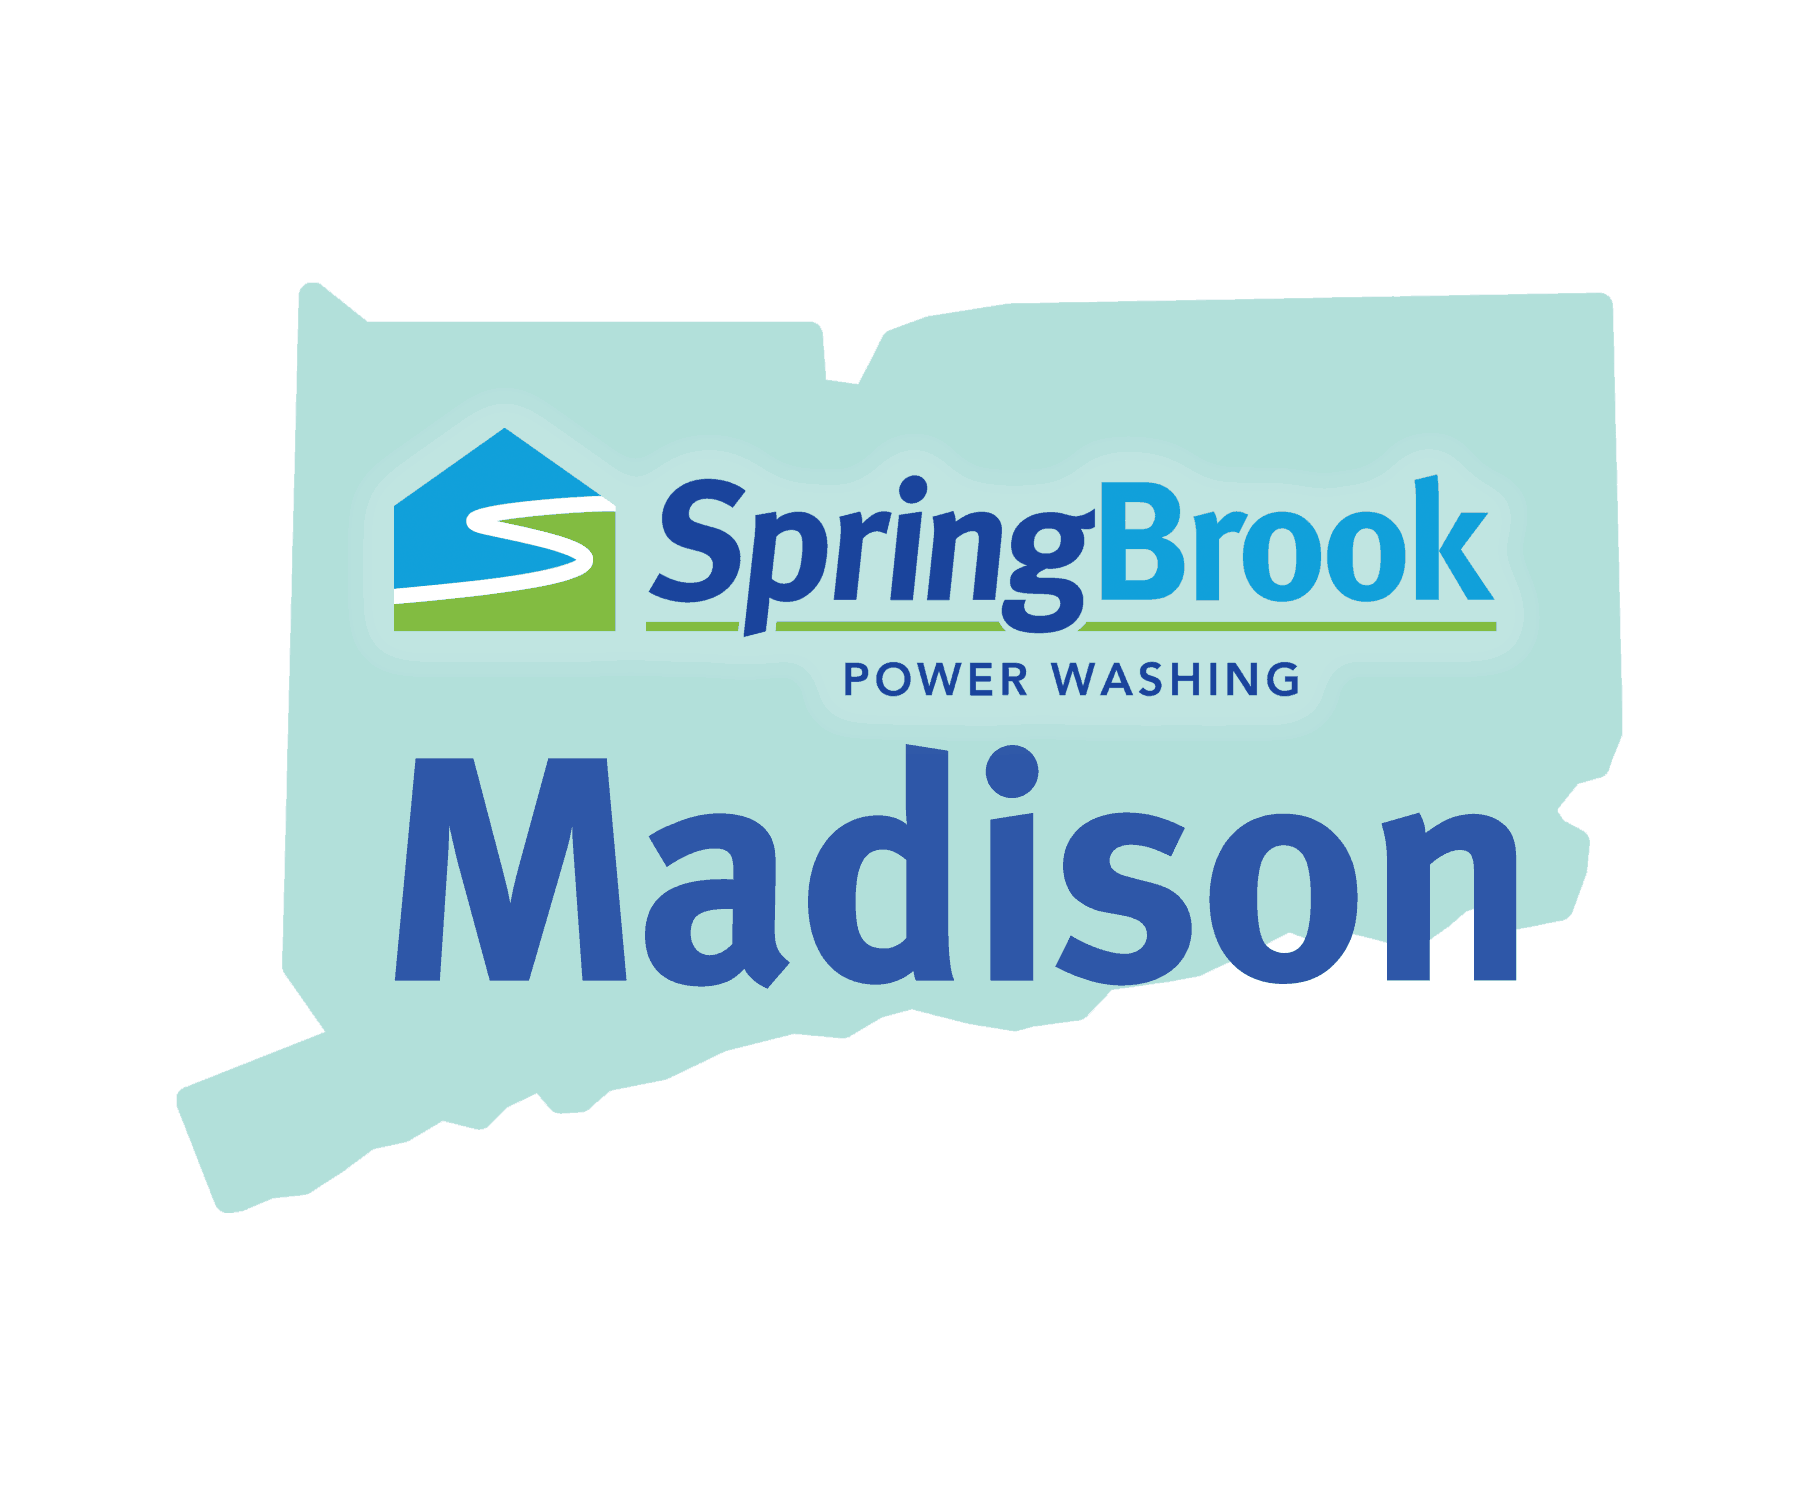 Springbrook Power Washing Madison Connecticut